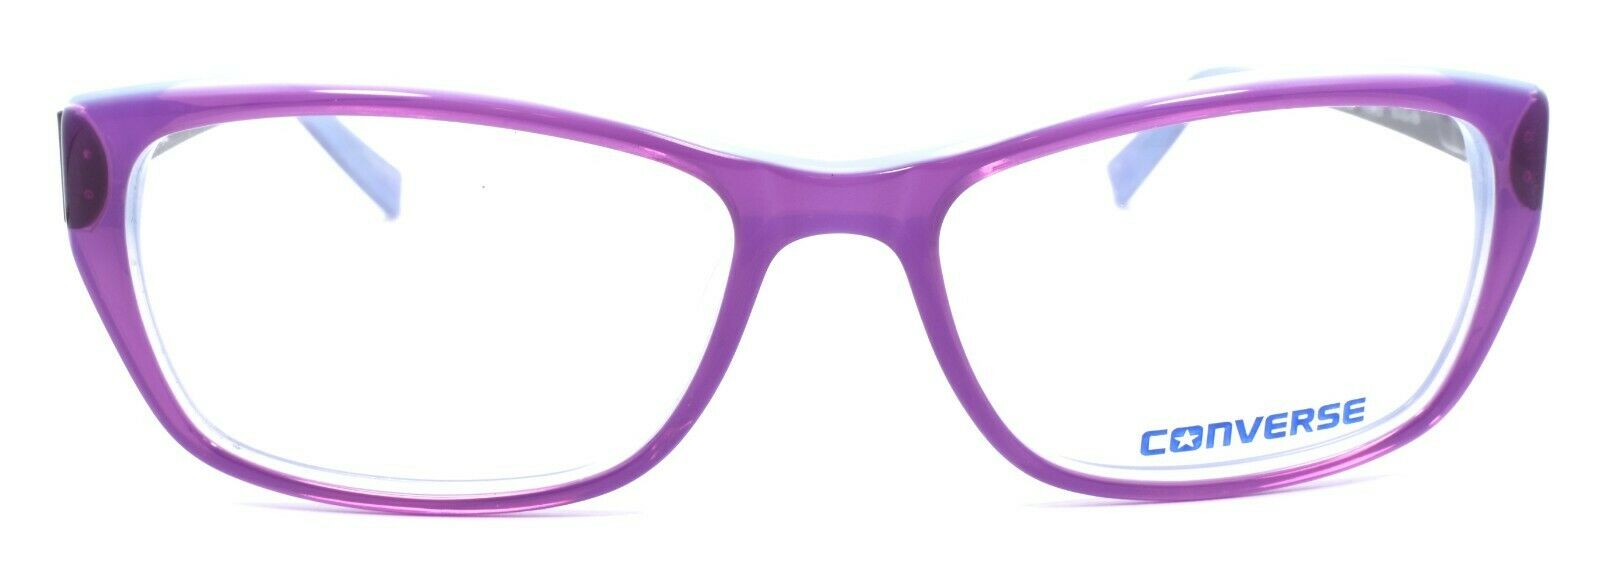 2-CONVERSE Q020 UF Women's Eyeglasses Frames 51-15-135 Purple + CASE-751286264968-IKSpecs